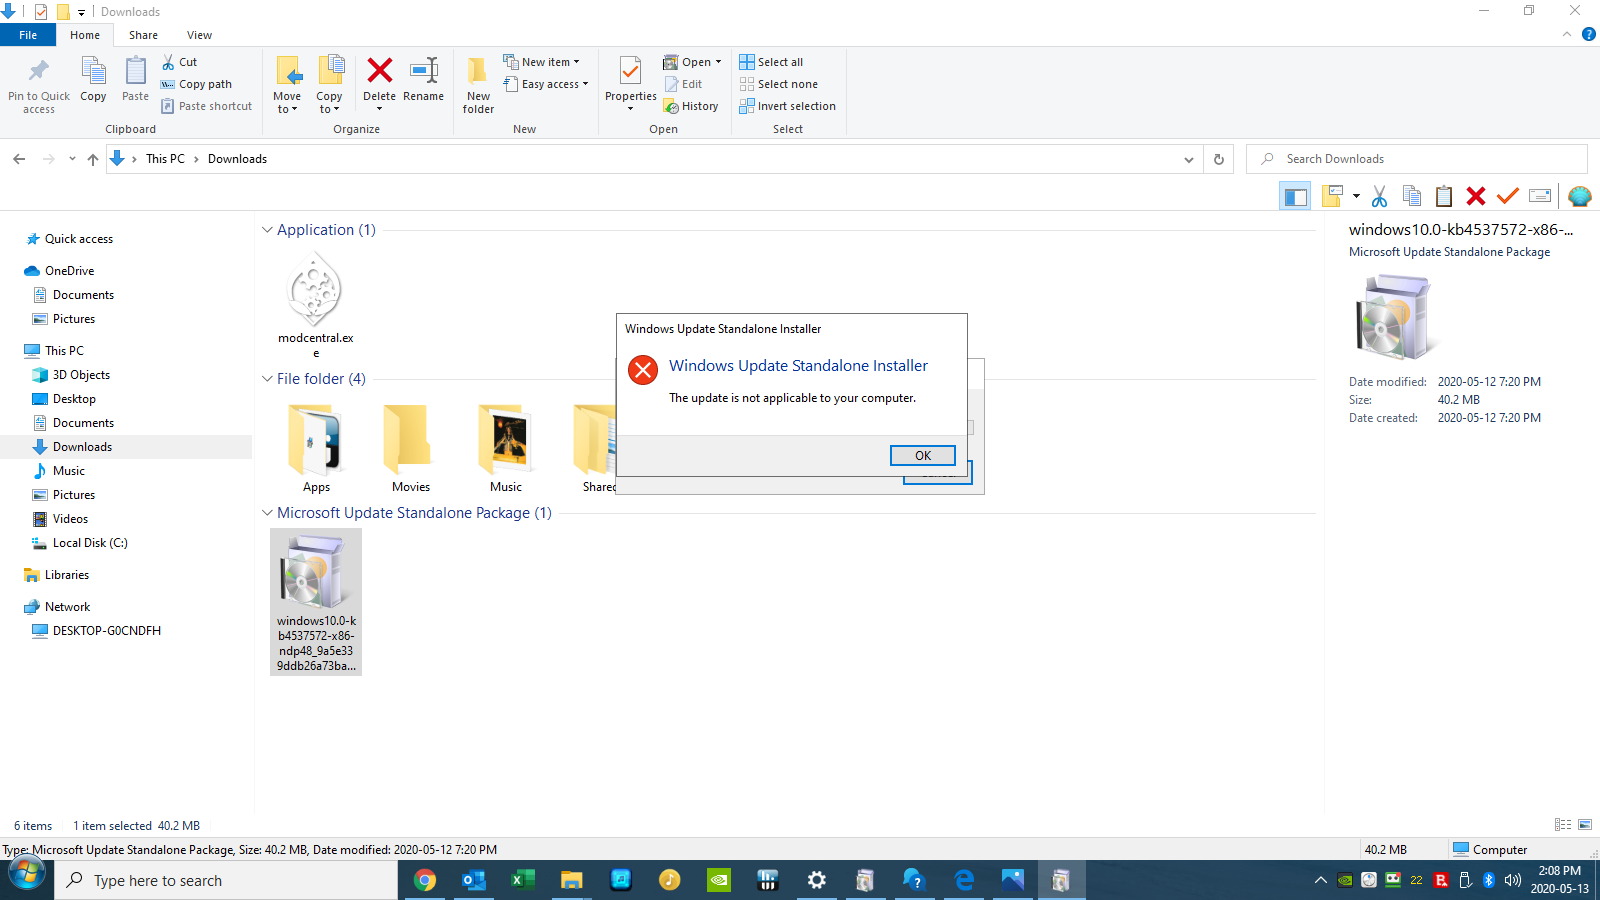 Windows 10 Pro 64 bit 1909, having problem installing net. framework? v0ktiJ.png